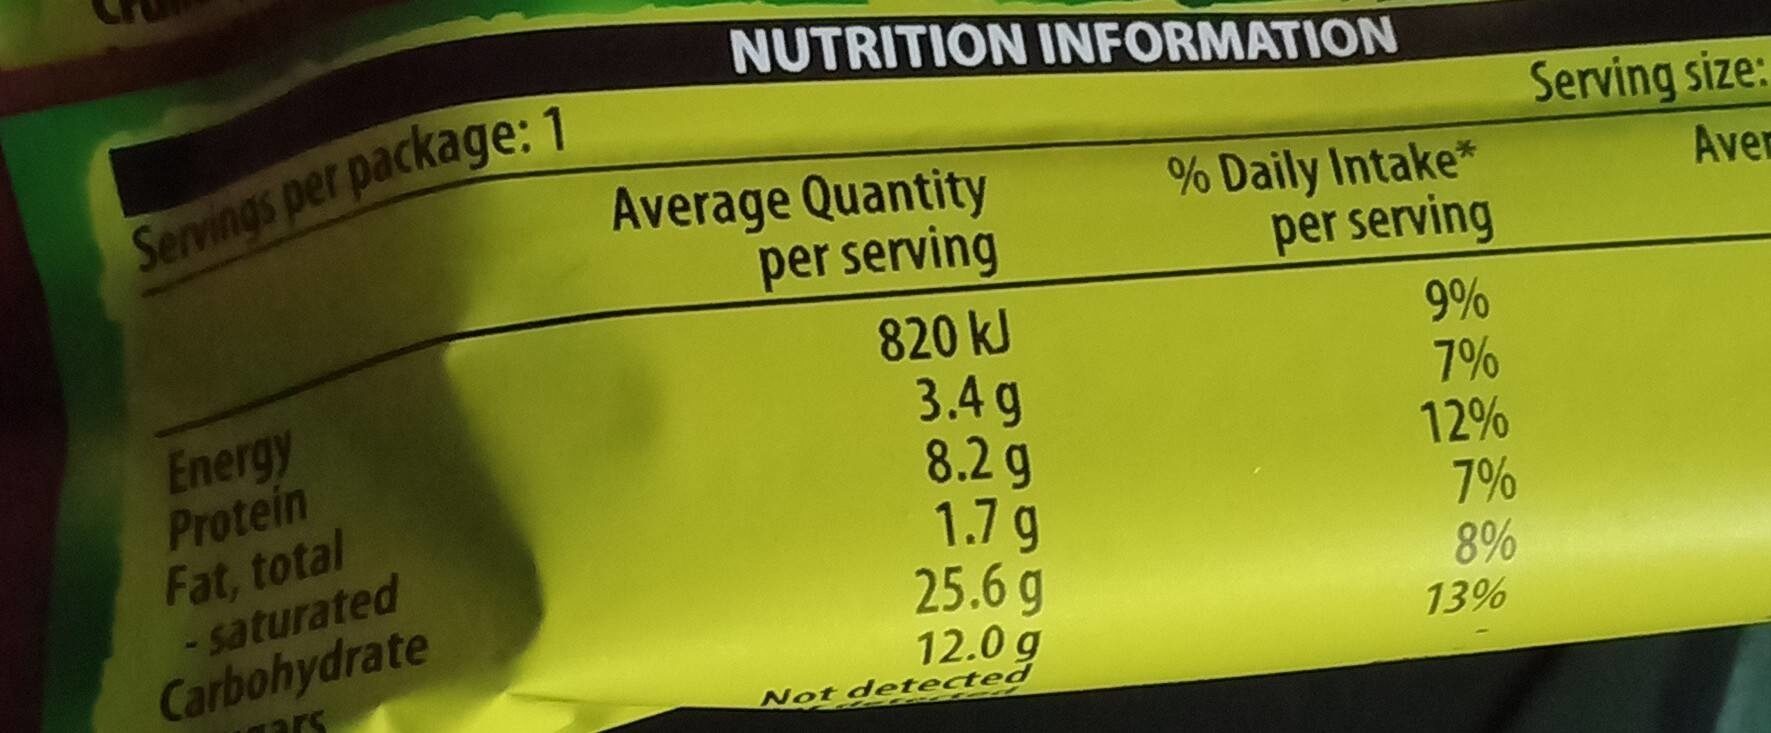 Crunchy museli bar - Nutrition facts